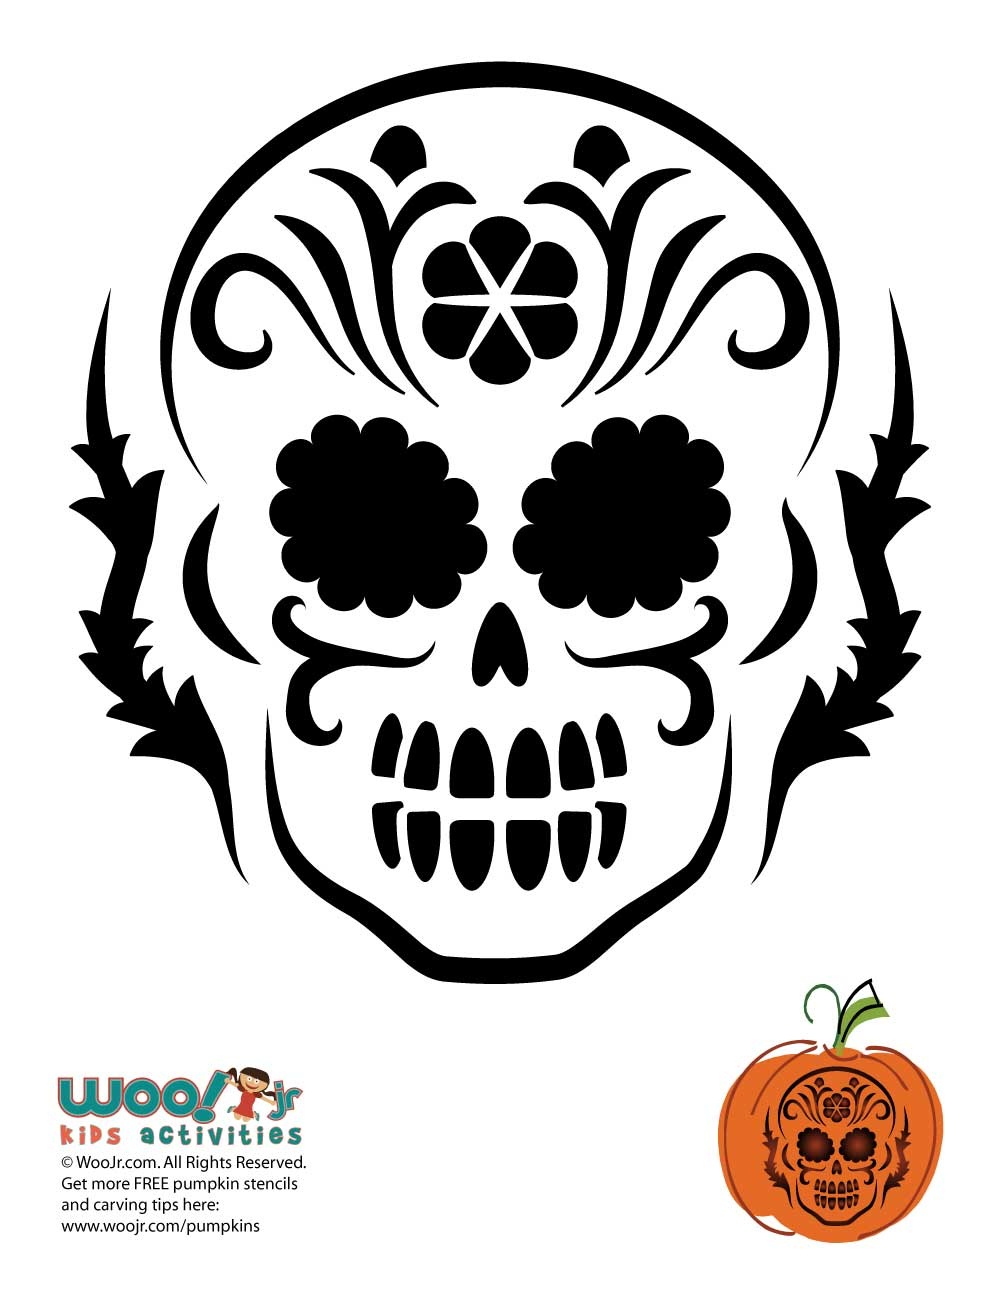 Day Of The Dead Pumpkin Carving Stencils | Woo! Jr. Kids Activities - Free Printable Sugar Skull Pumpkin Stencils